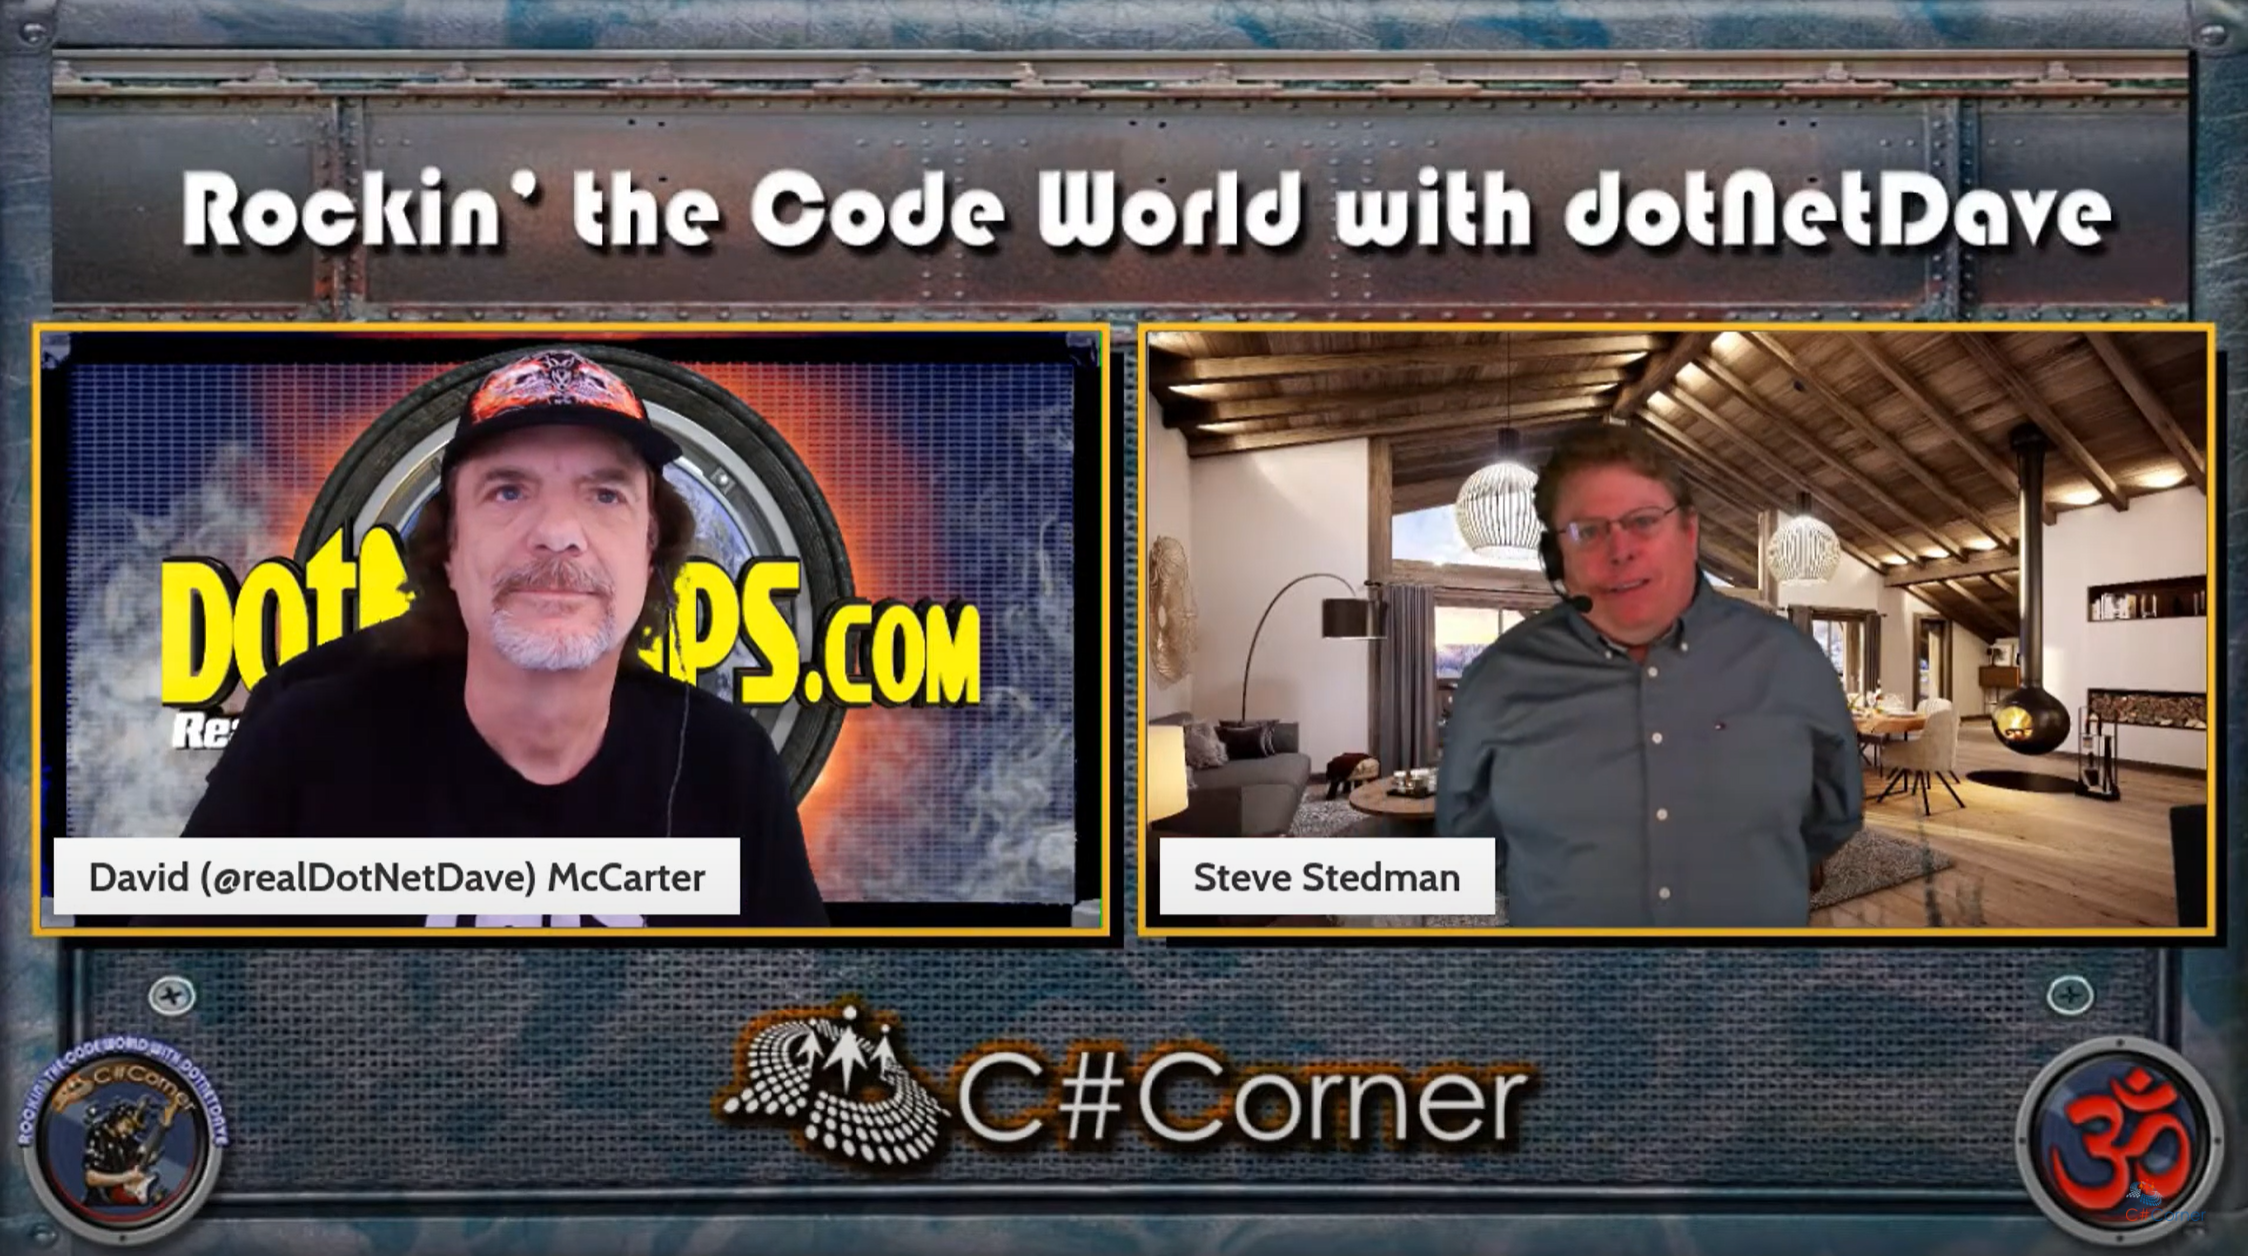 Live Recording of Steve Stedman and dotNetDave on “Rockin’ the Code World”